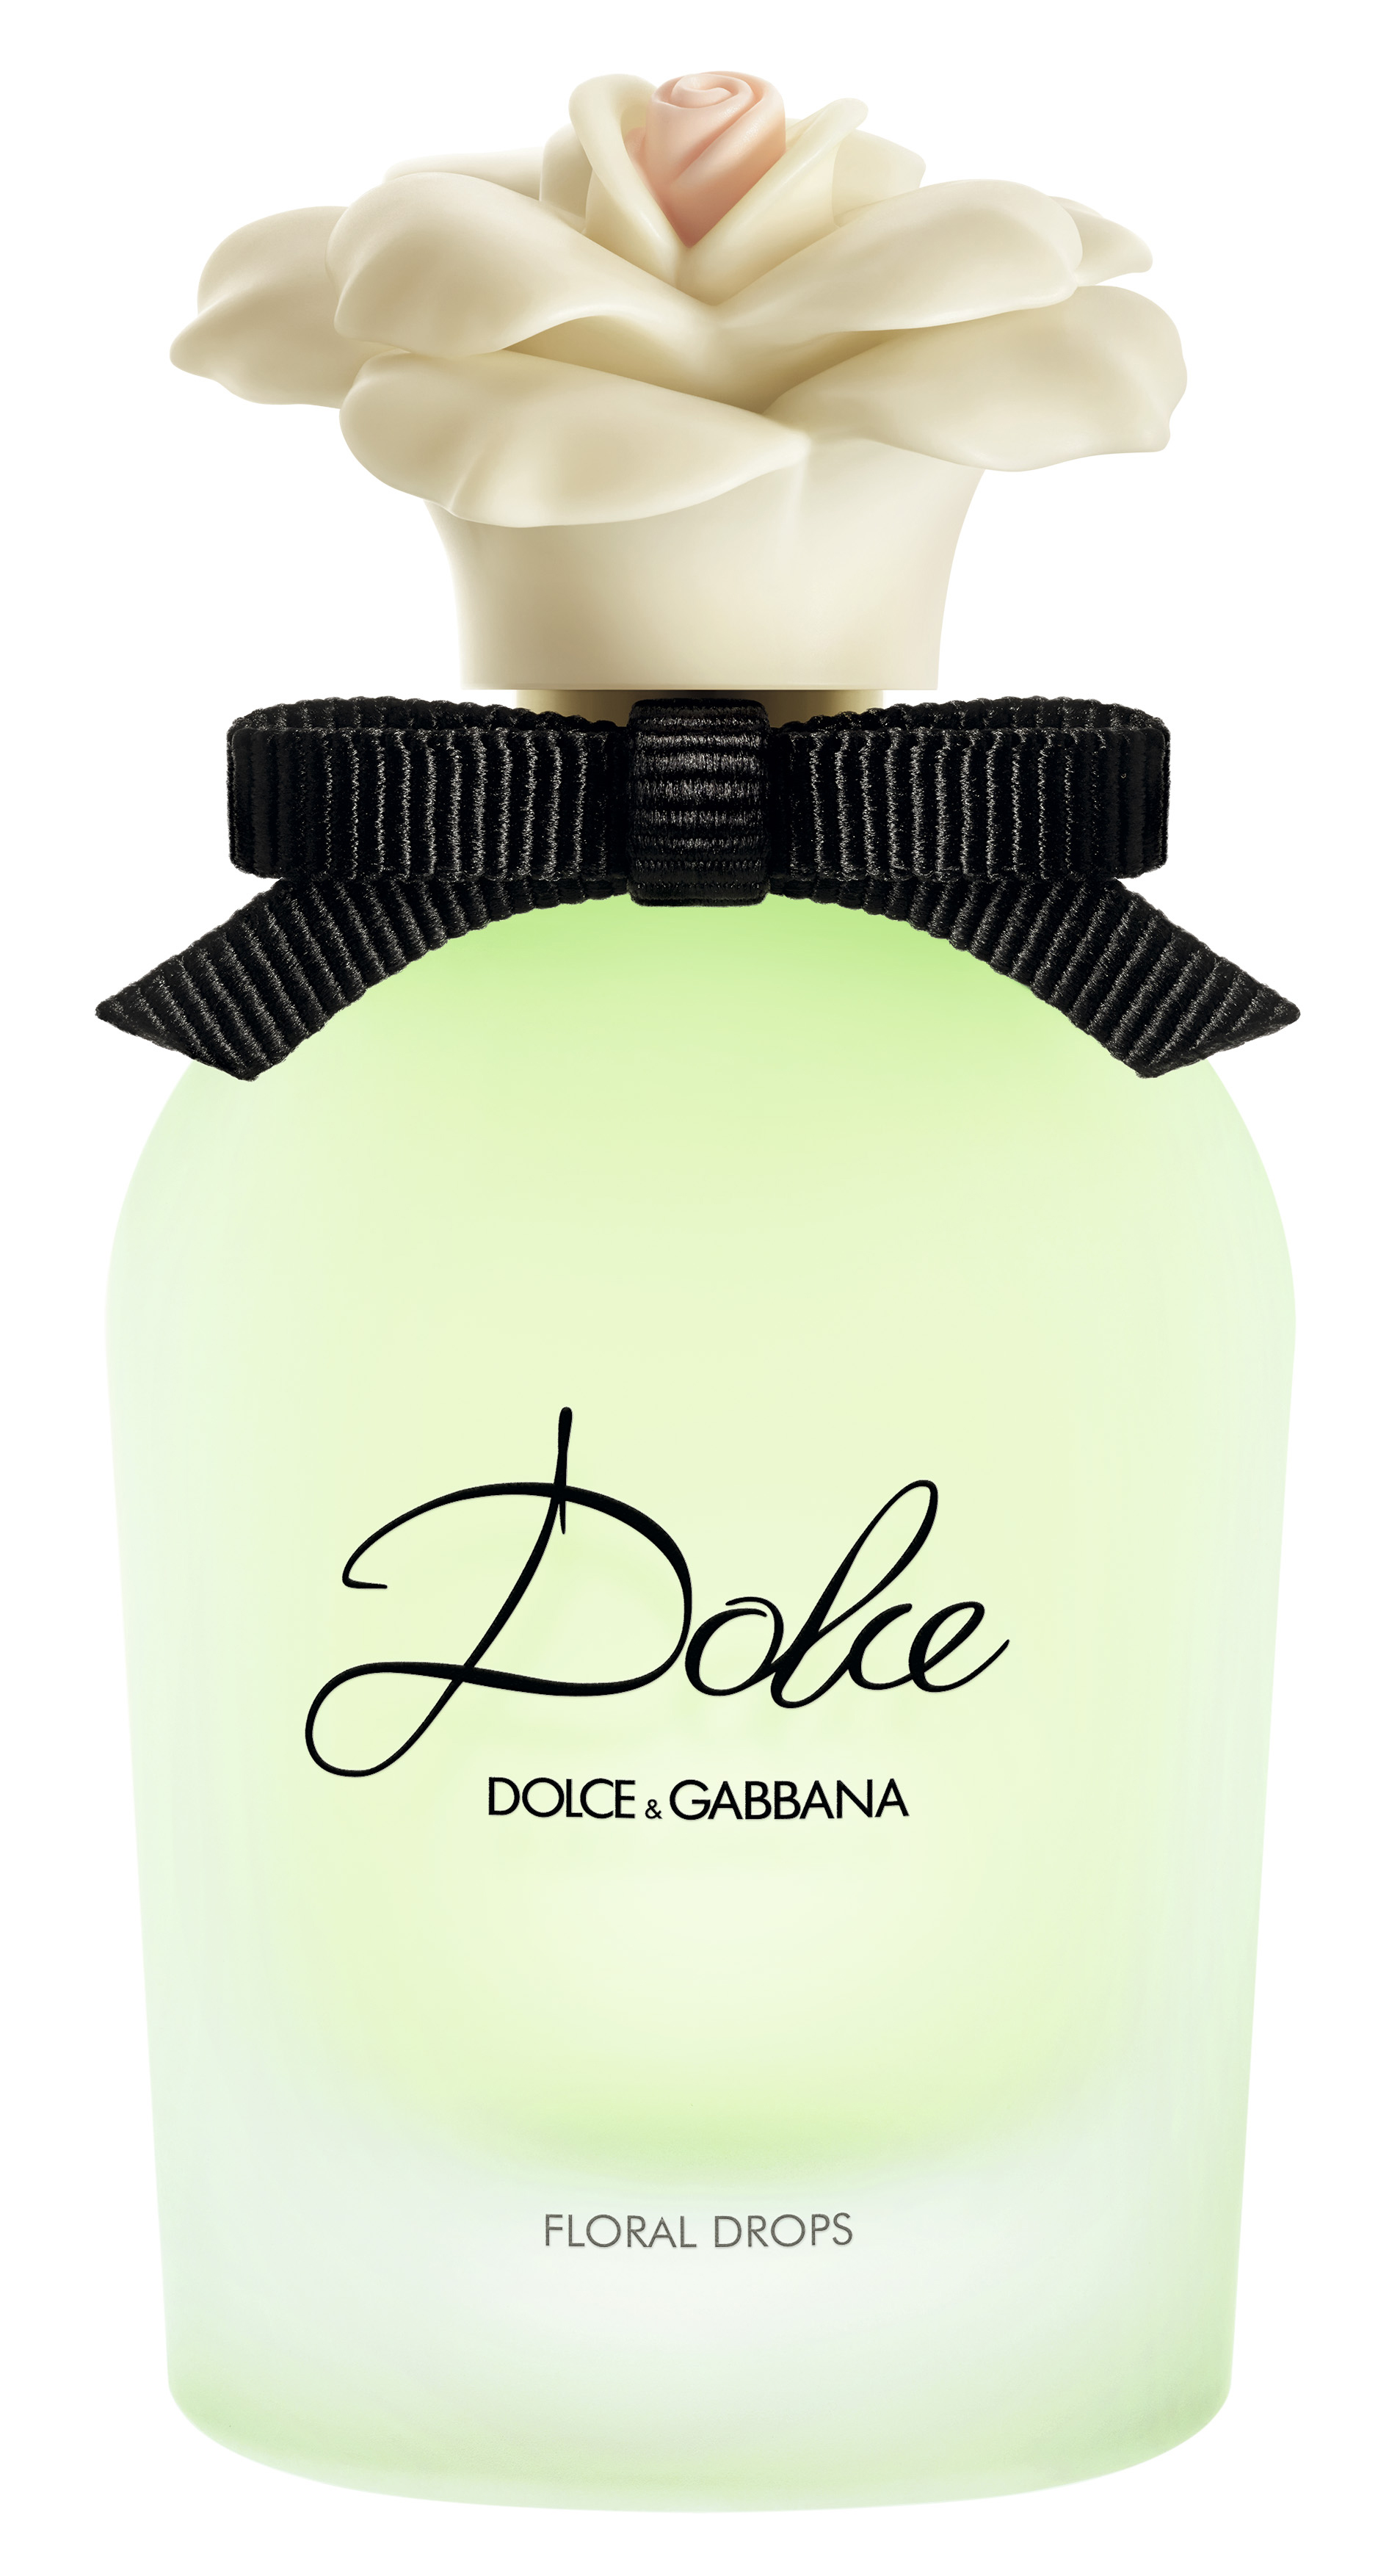 Dolce & Gabbana Floral Drops EdT 50ml